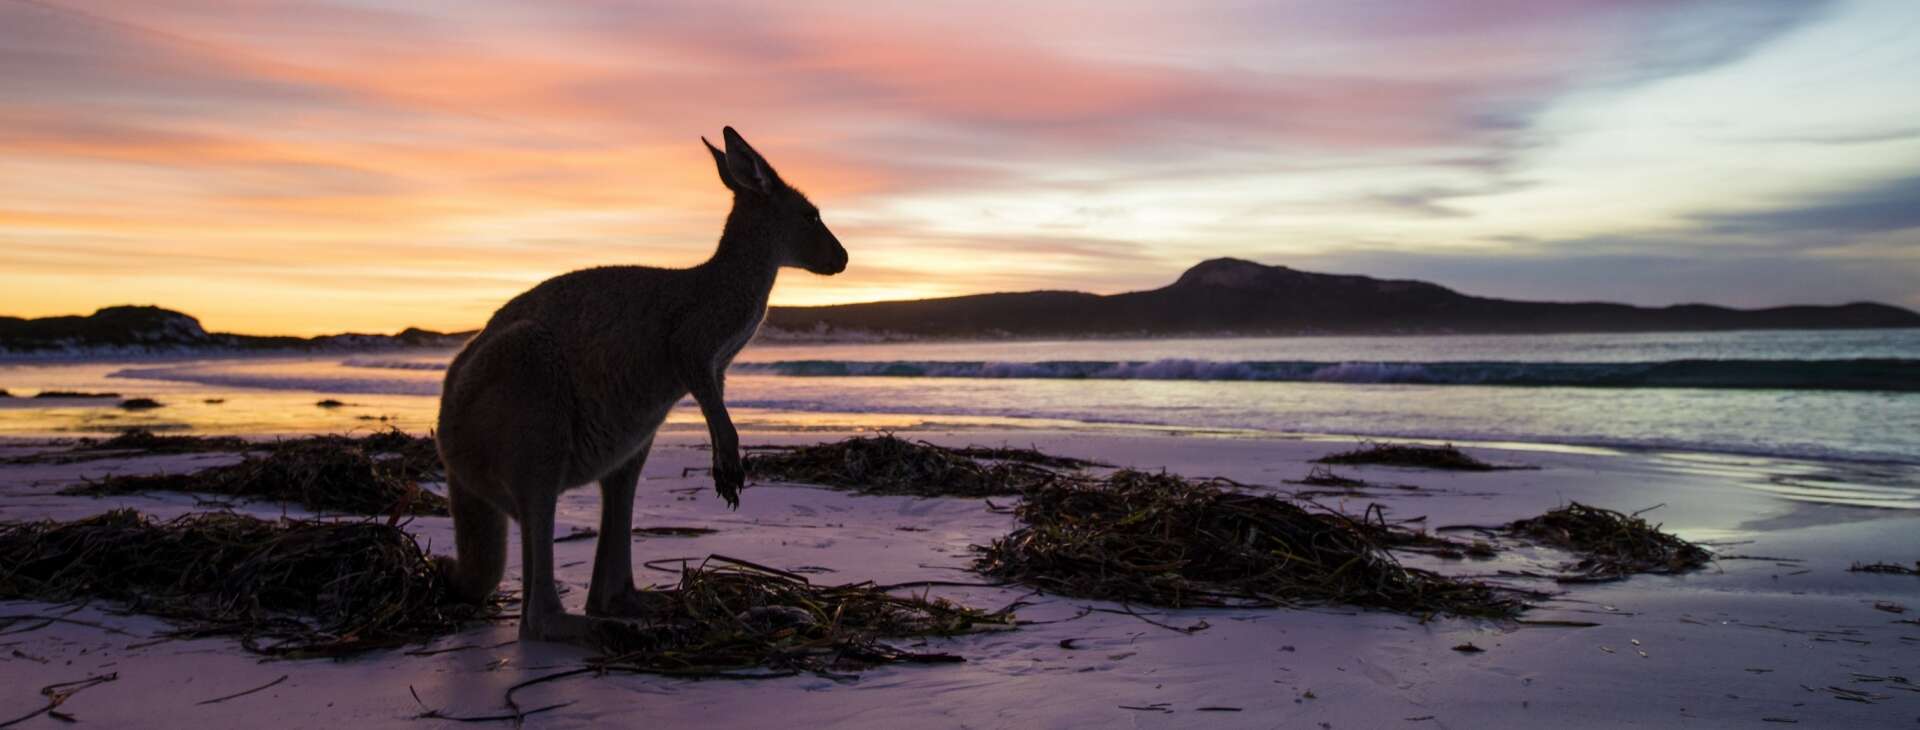 Kangaroo at Lucky Bay, Cape Le Grand National Park 